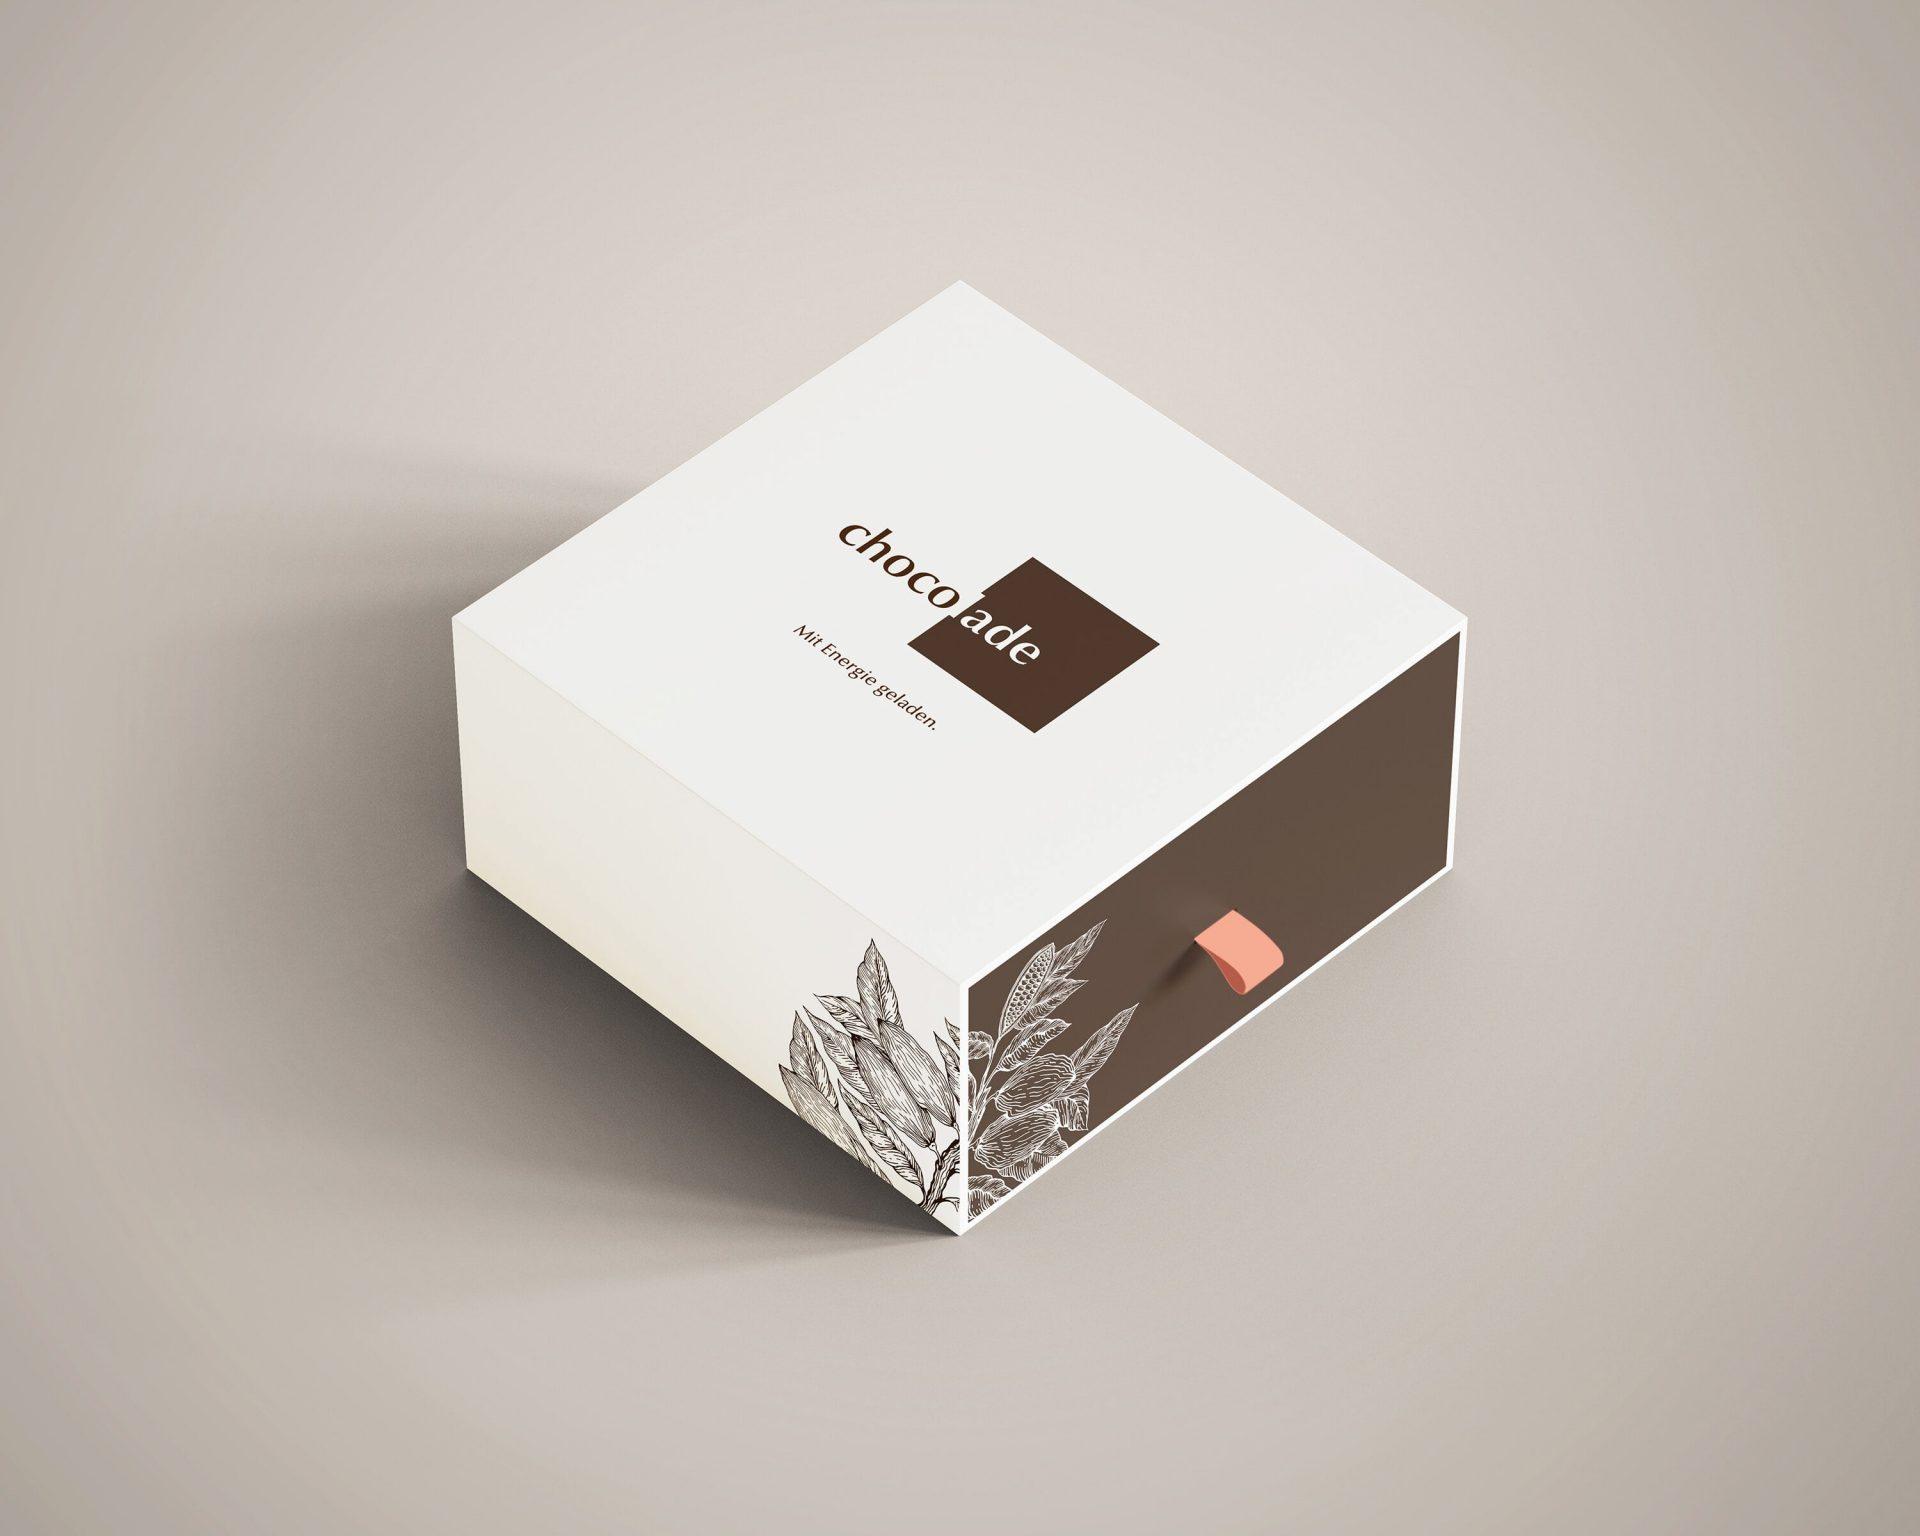 Packaging Design ‣ chocolade